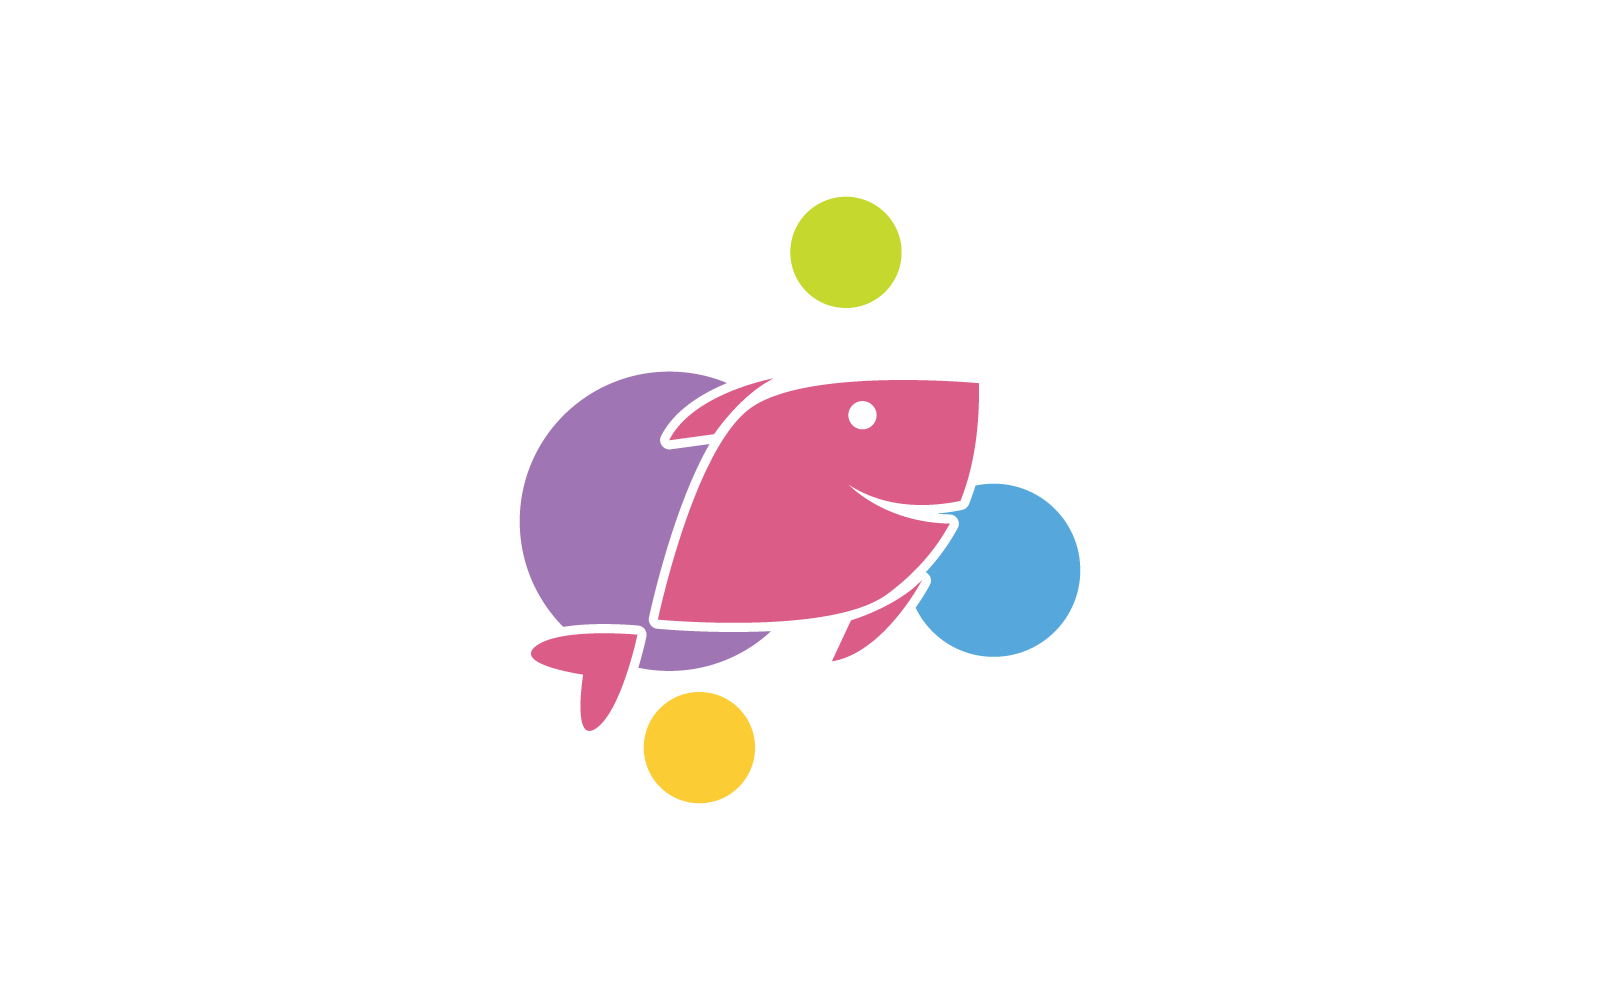 Fish ilustration logo vector design template